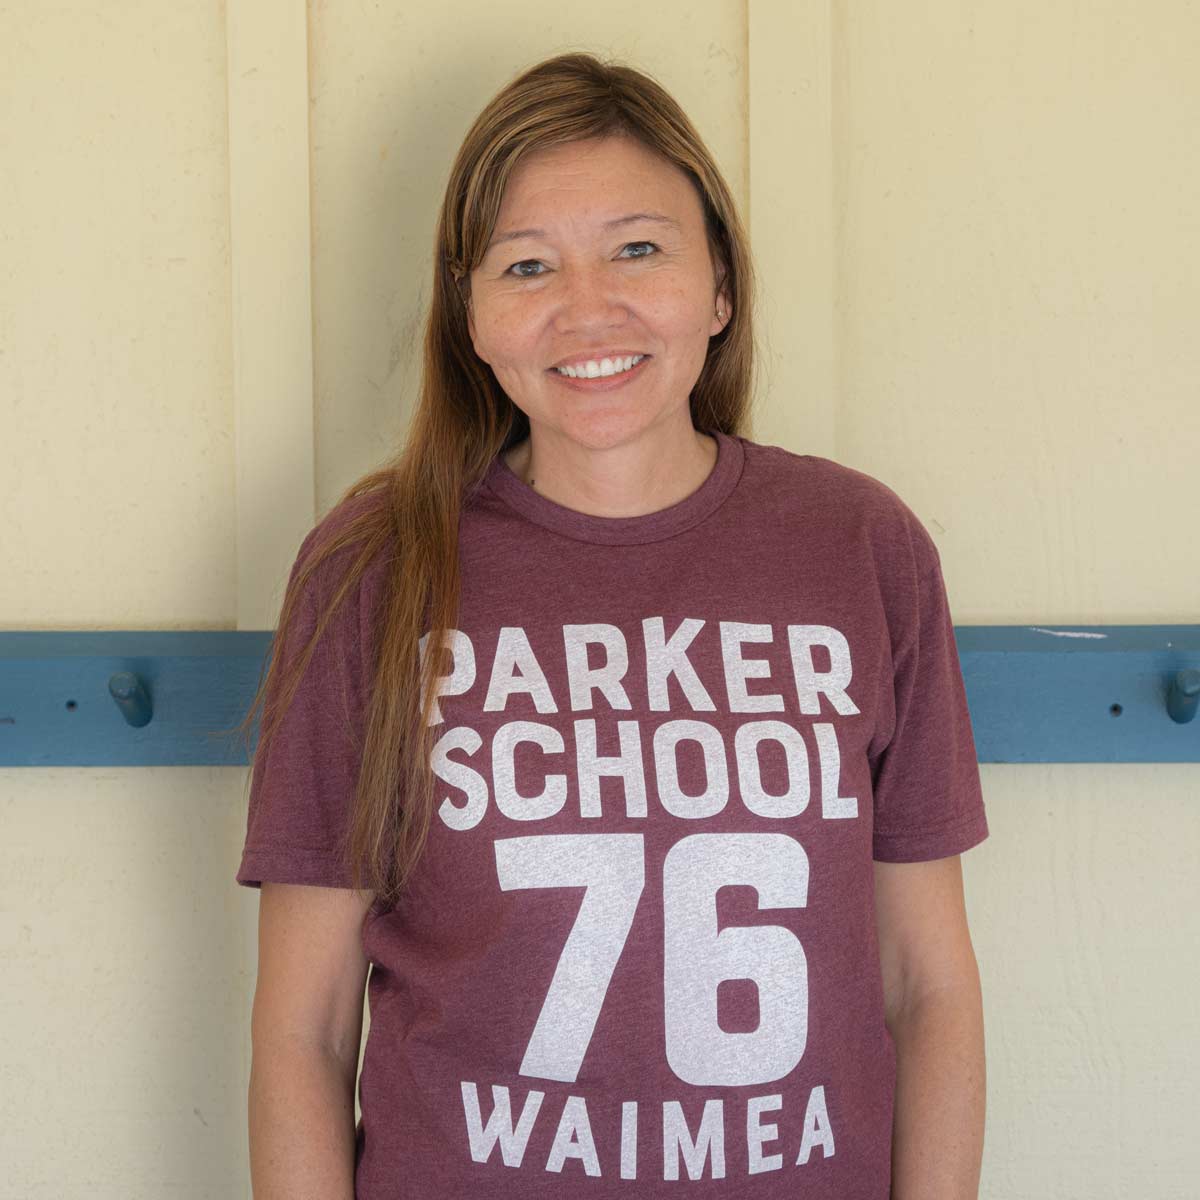 Parker School 76 T-shirt